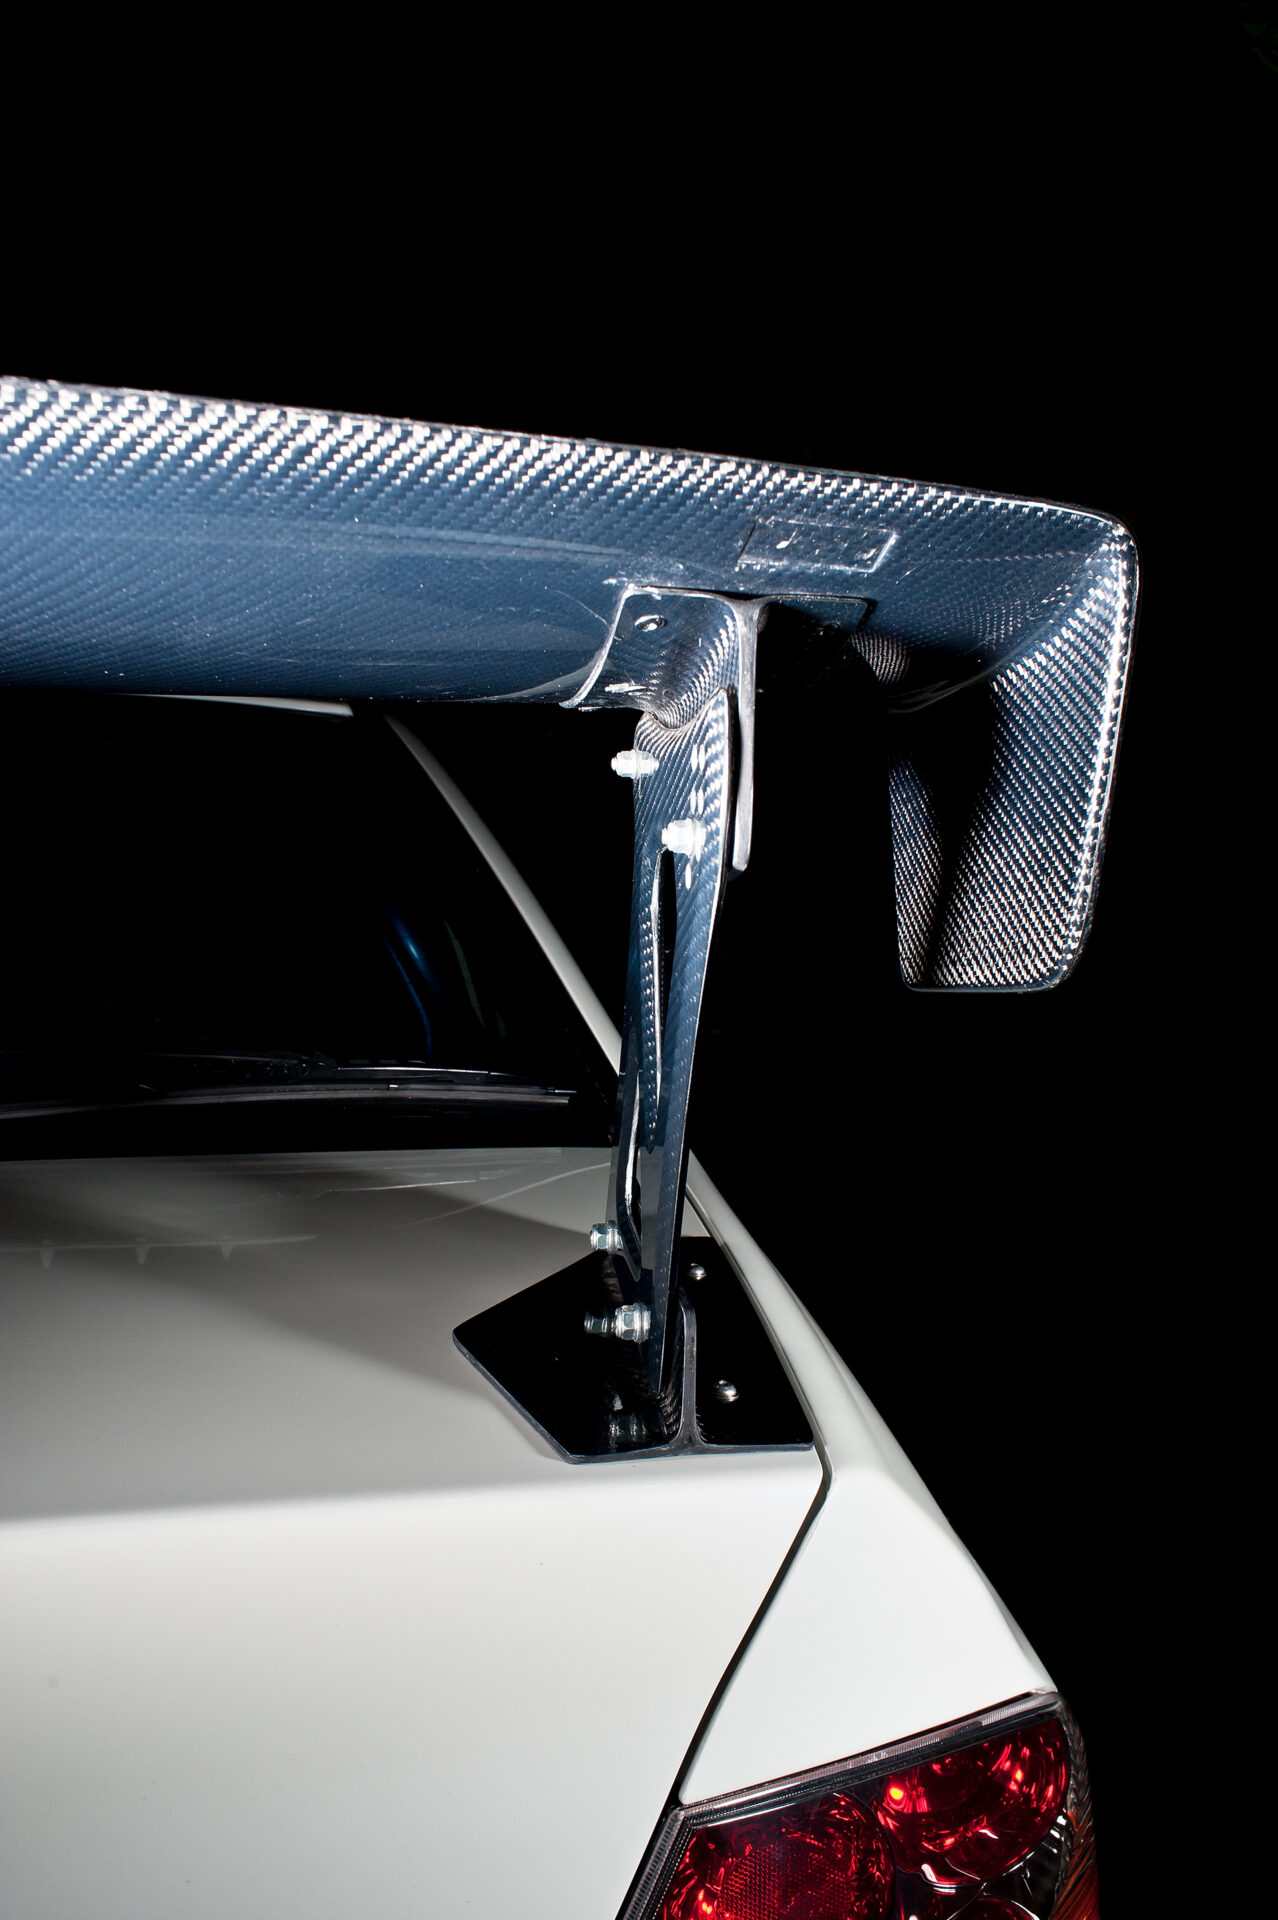 Rear carbon fiber wing shot of White Mitsubishi Evo IX with Varis body kit